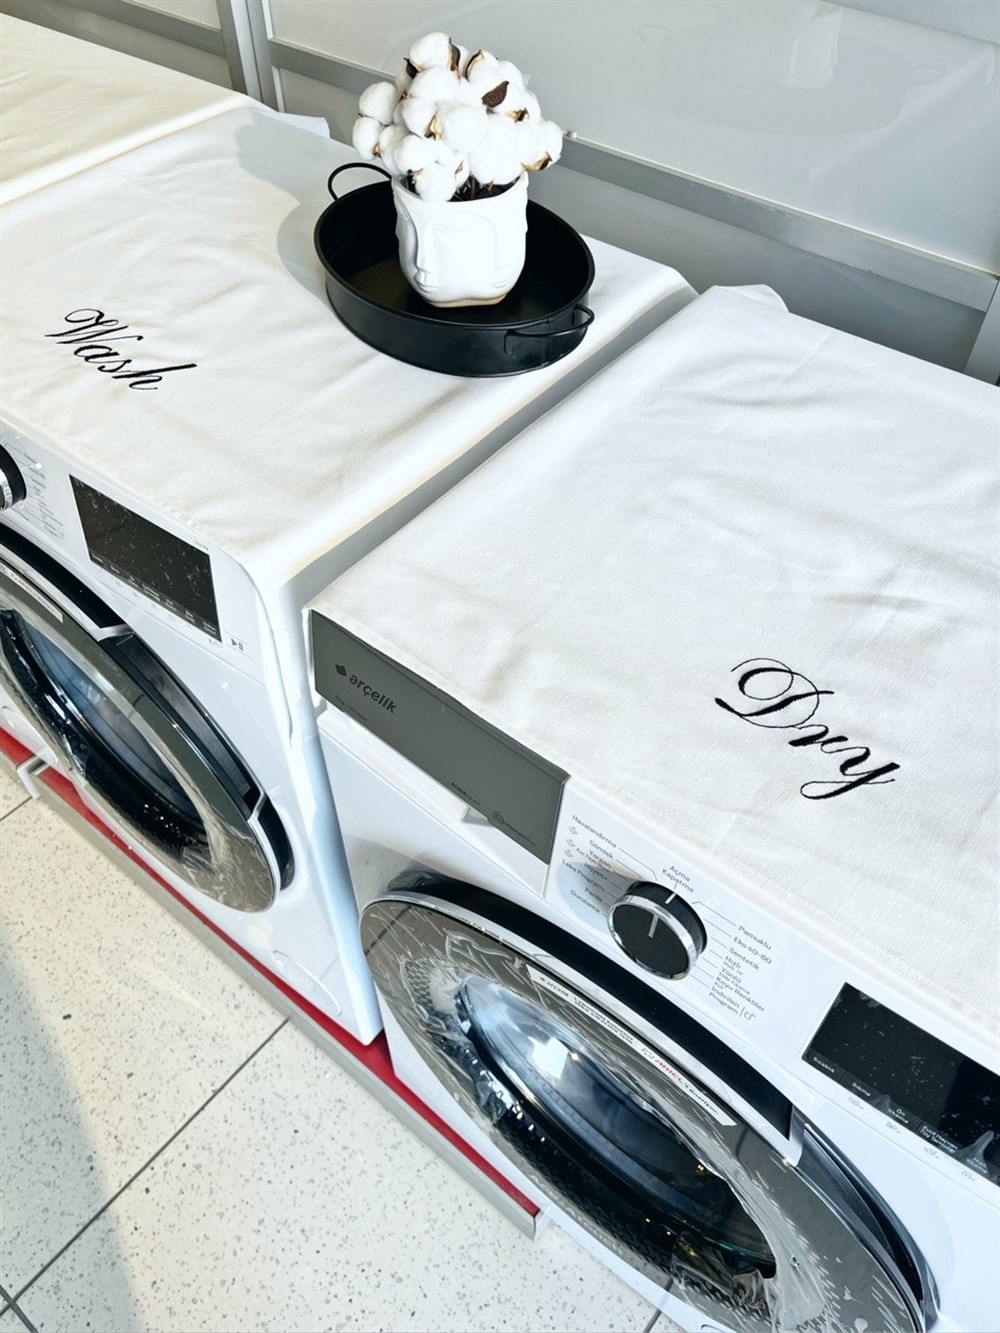 Atölye No 35 Wash Çamaşır Makinesi Örtüsü & Dry Çamaşır Kurutma Makinesi Örtüsü 2'li Set Beyaz